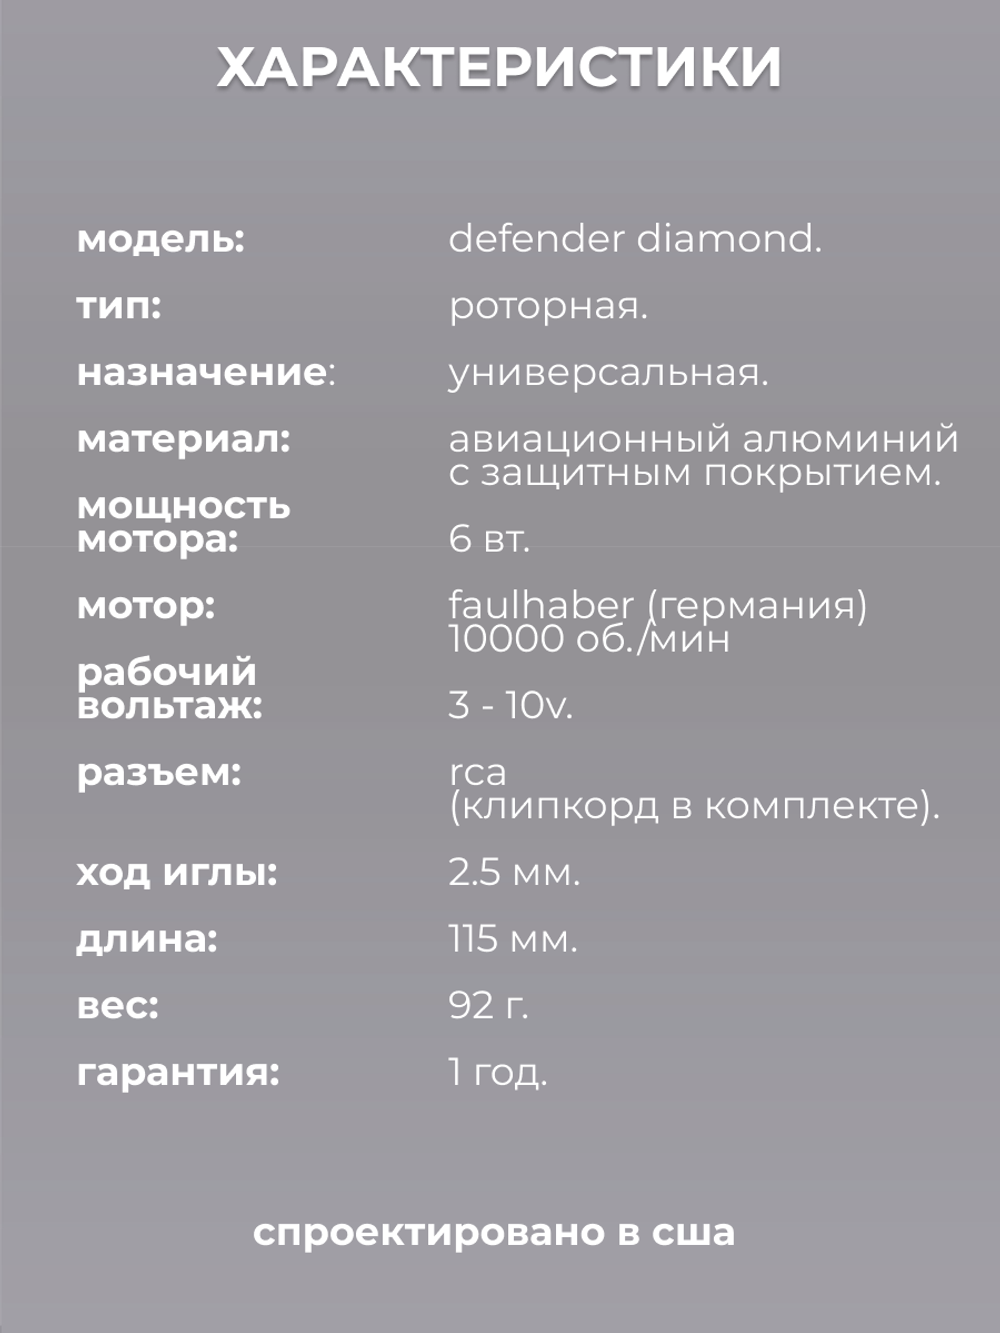 Defender Diamond